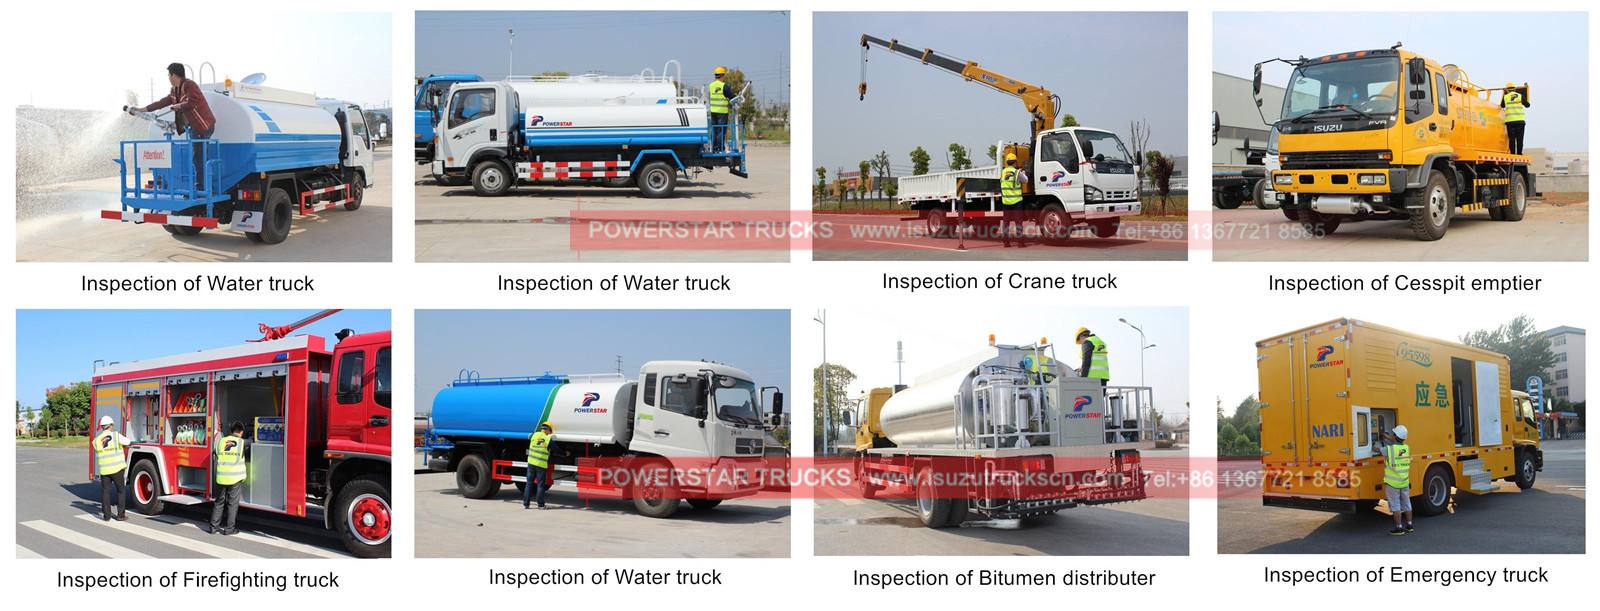 customer build Isuzu tanker trucks for inspectioin and training